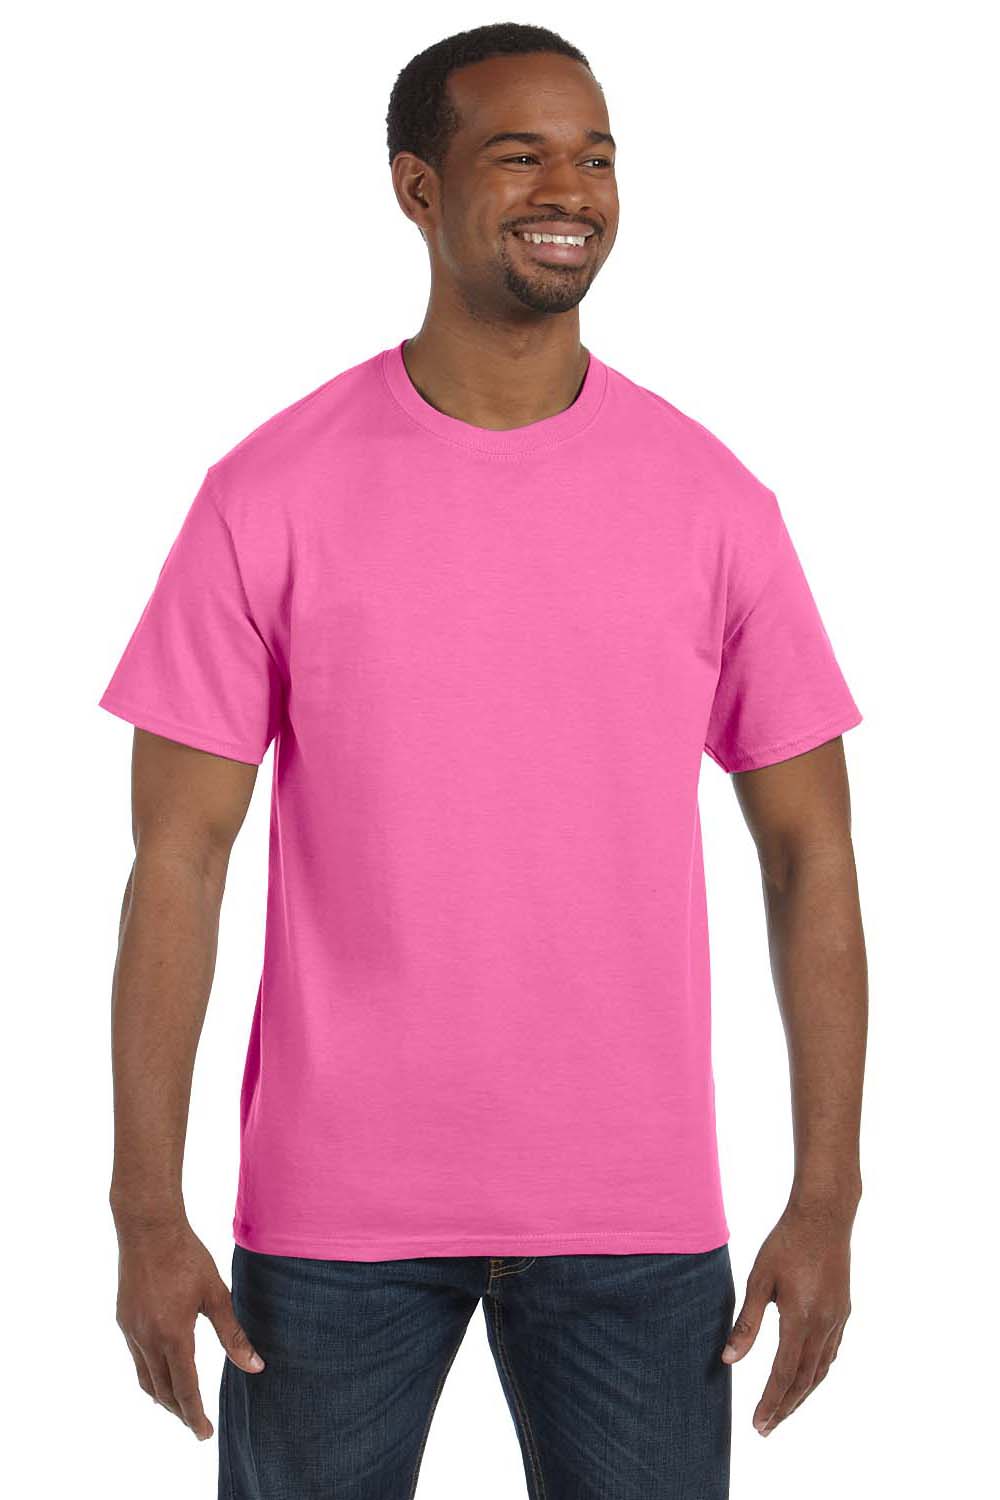 Hanes 5250T Mens ComfortSoft Short Sleeve Crewneck T-Shirt Pink Front